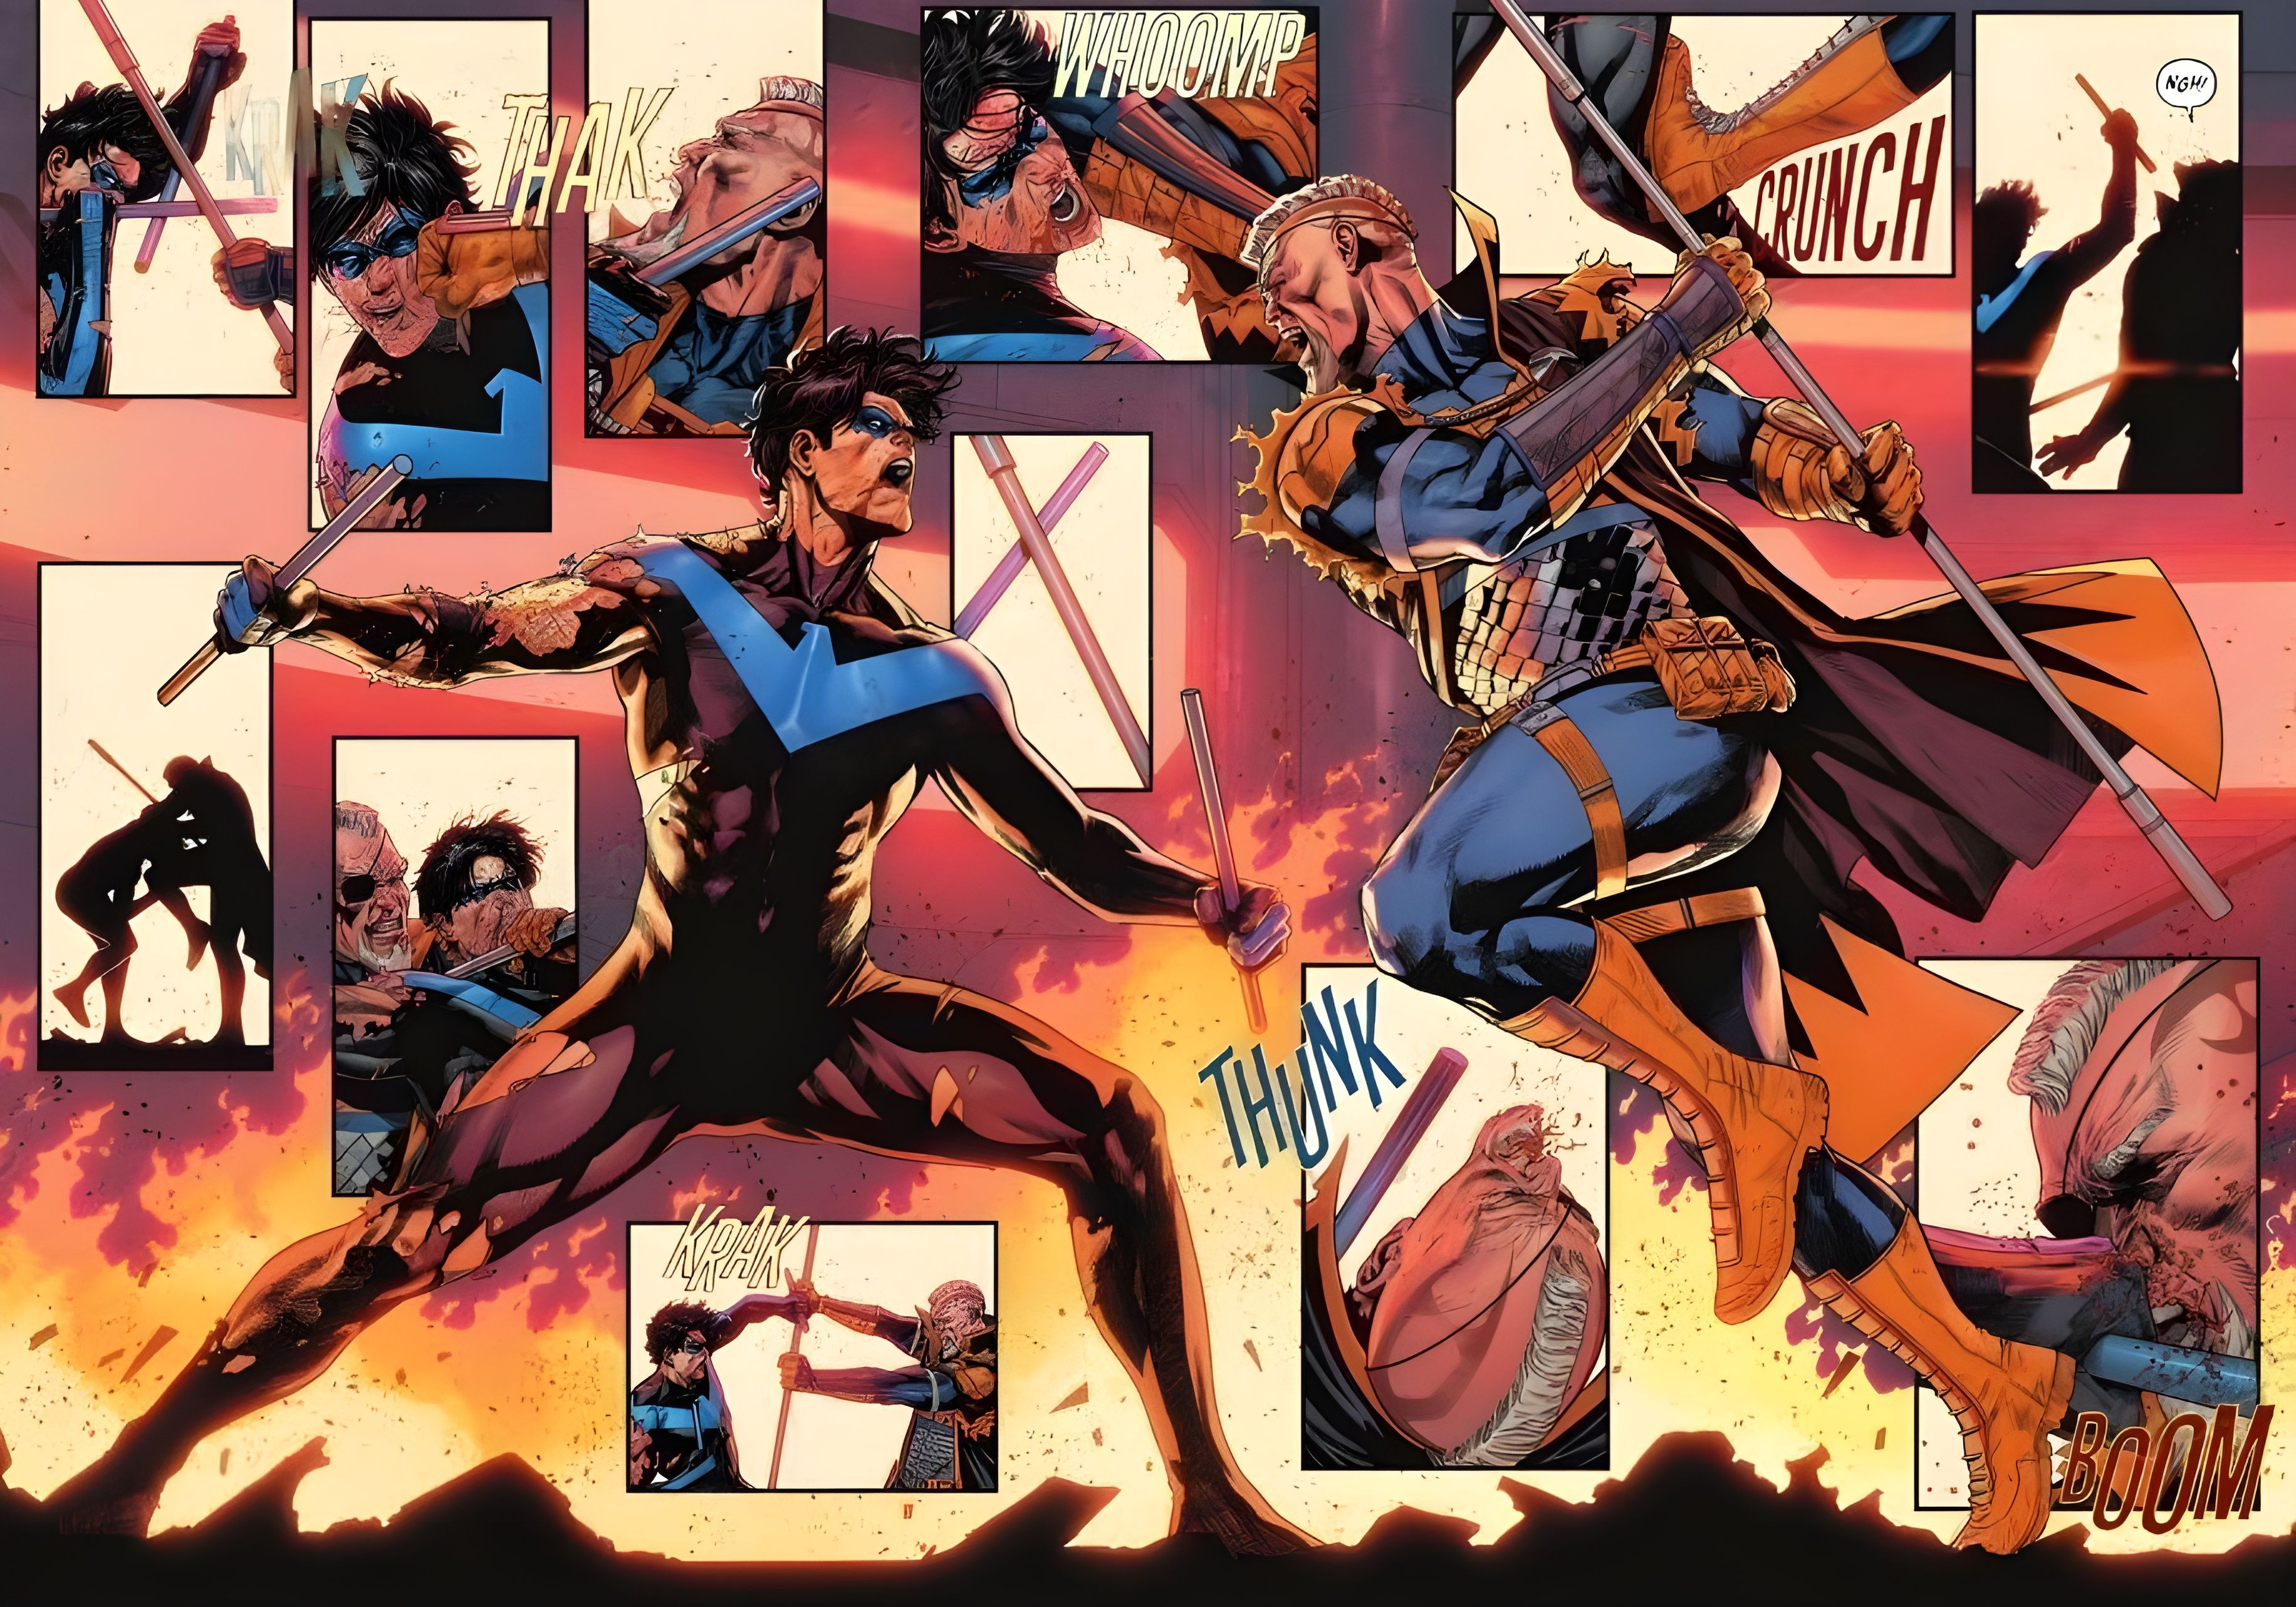 Nightwing vs. Deathstroke in Dark Crisis #2 